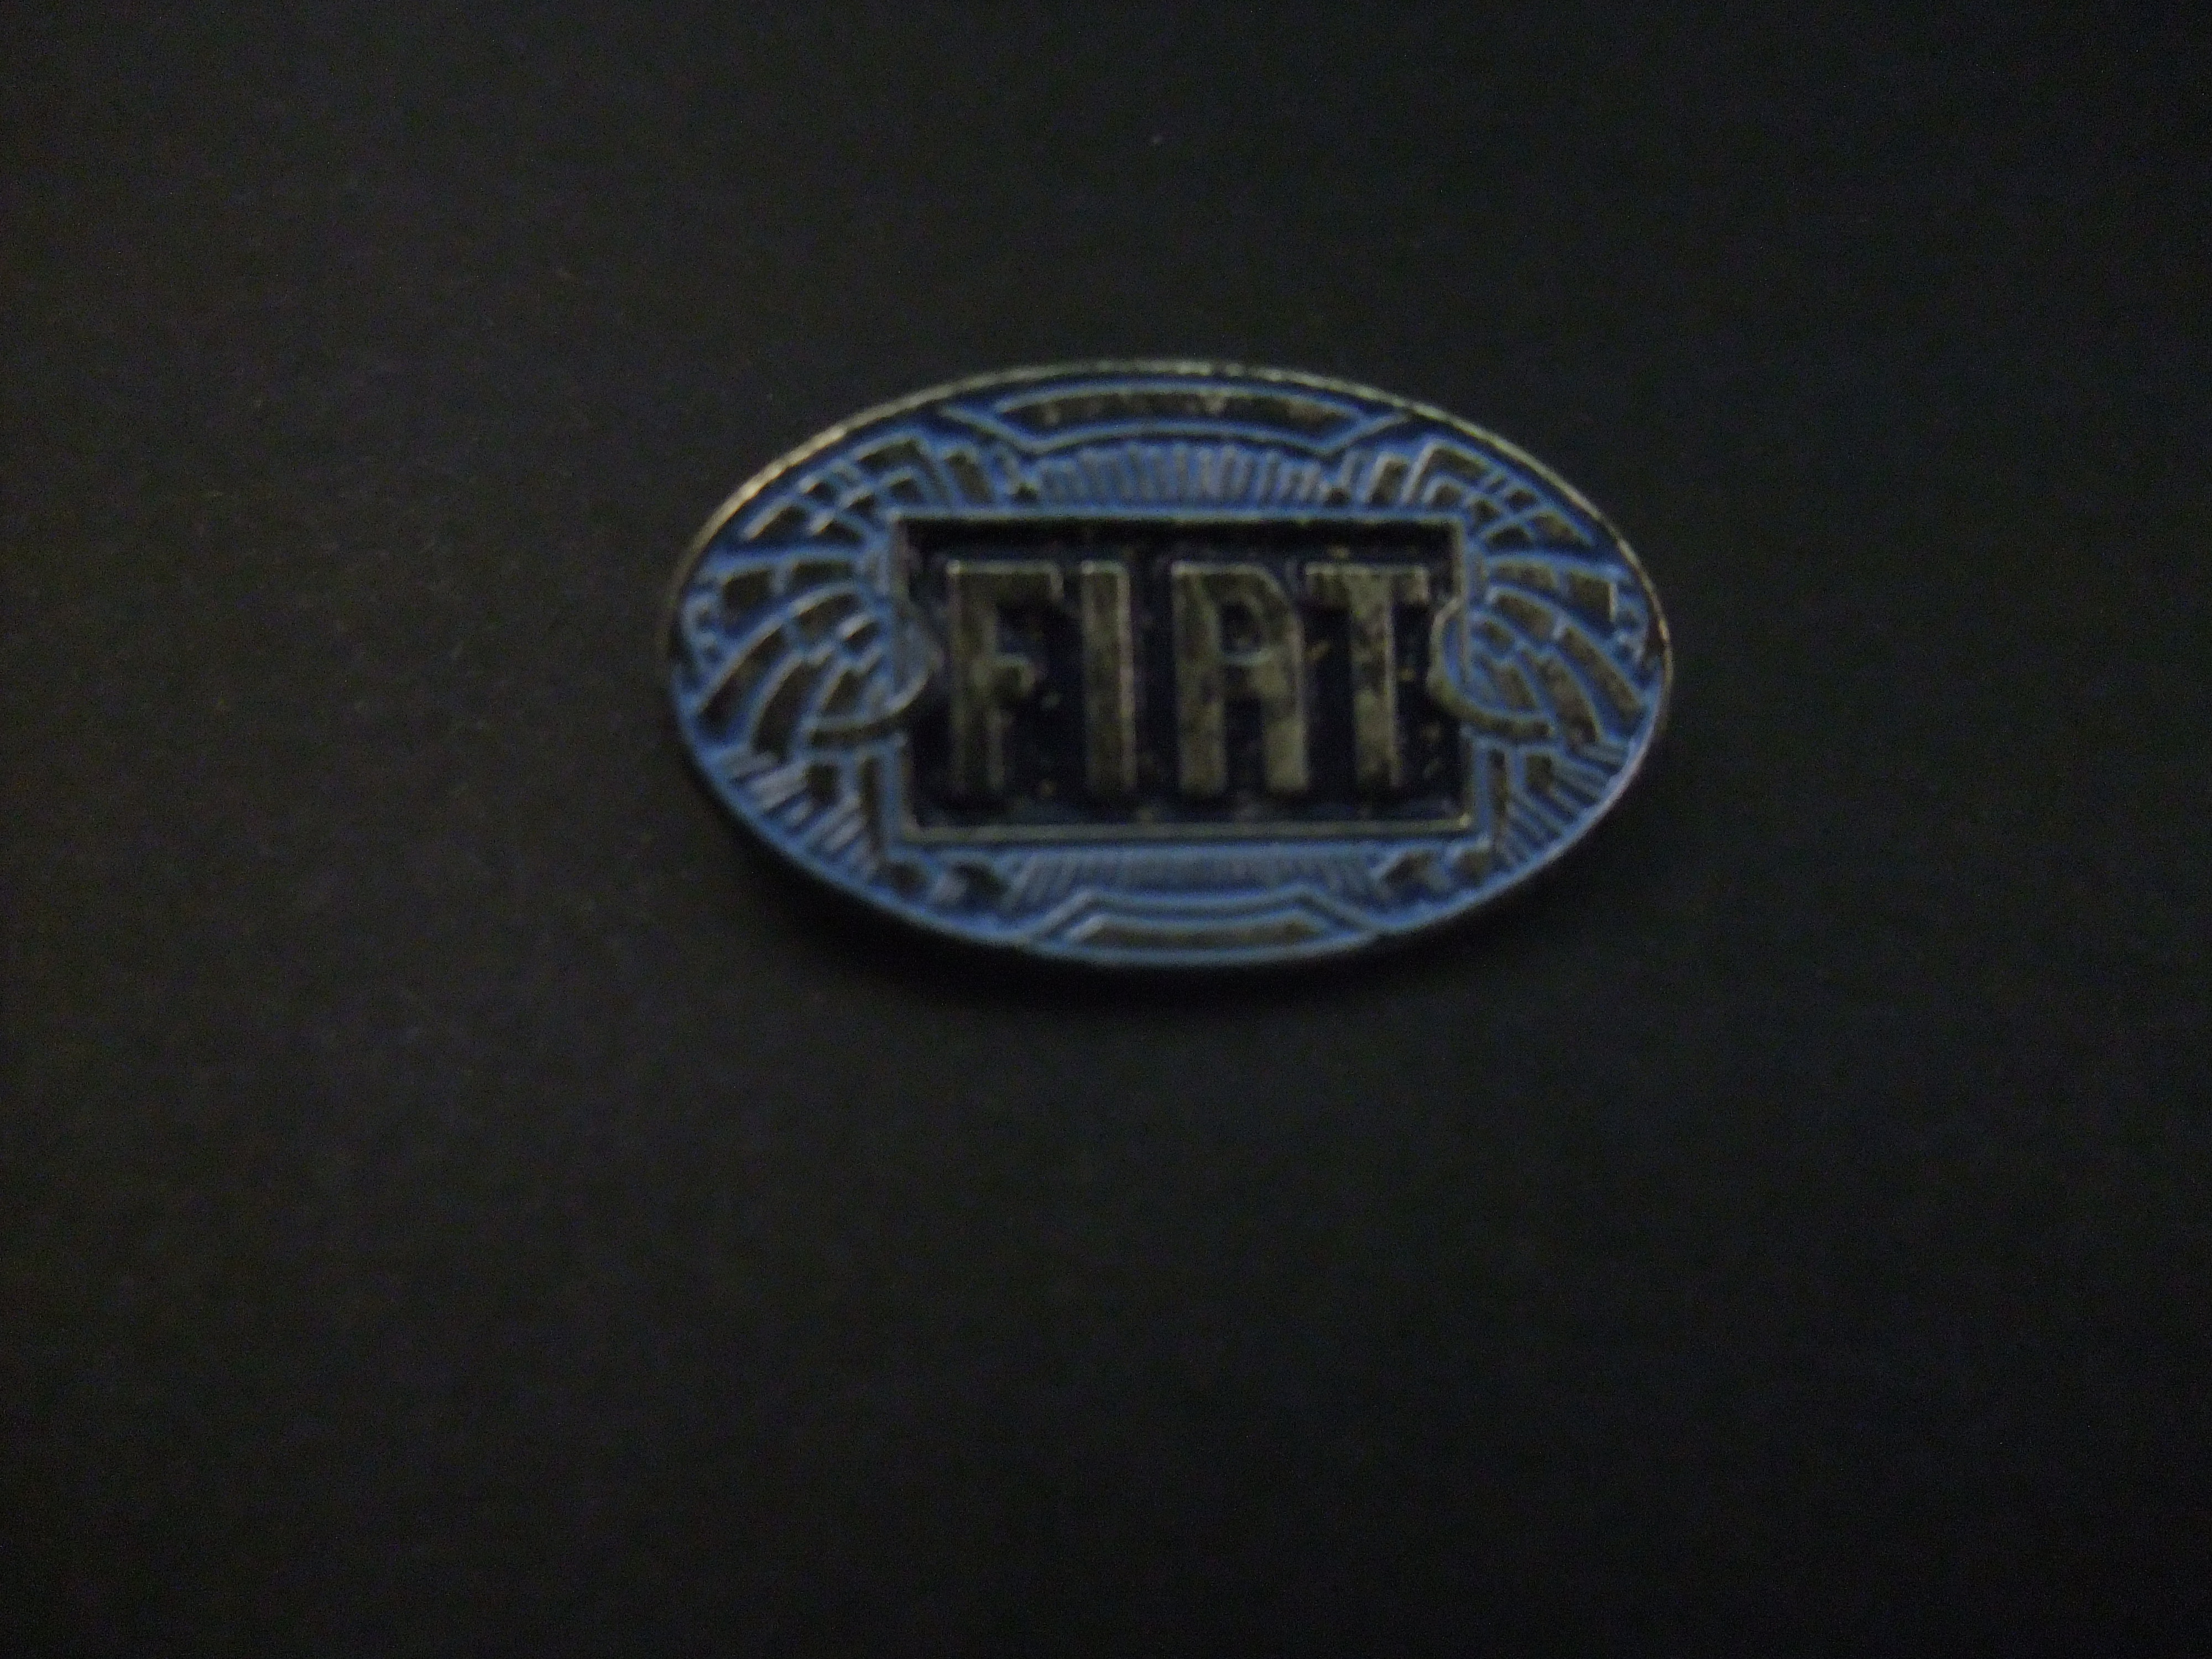 Fiat ( automerk) ovaal logo blauw